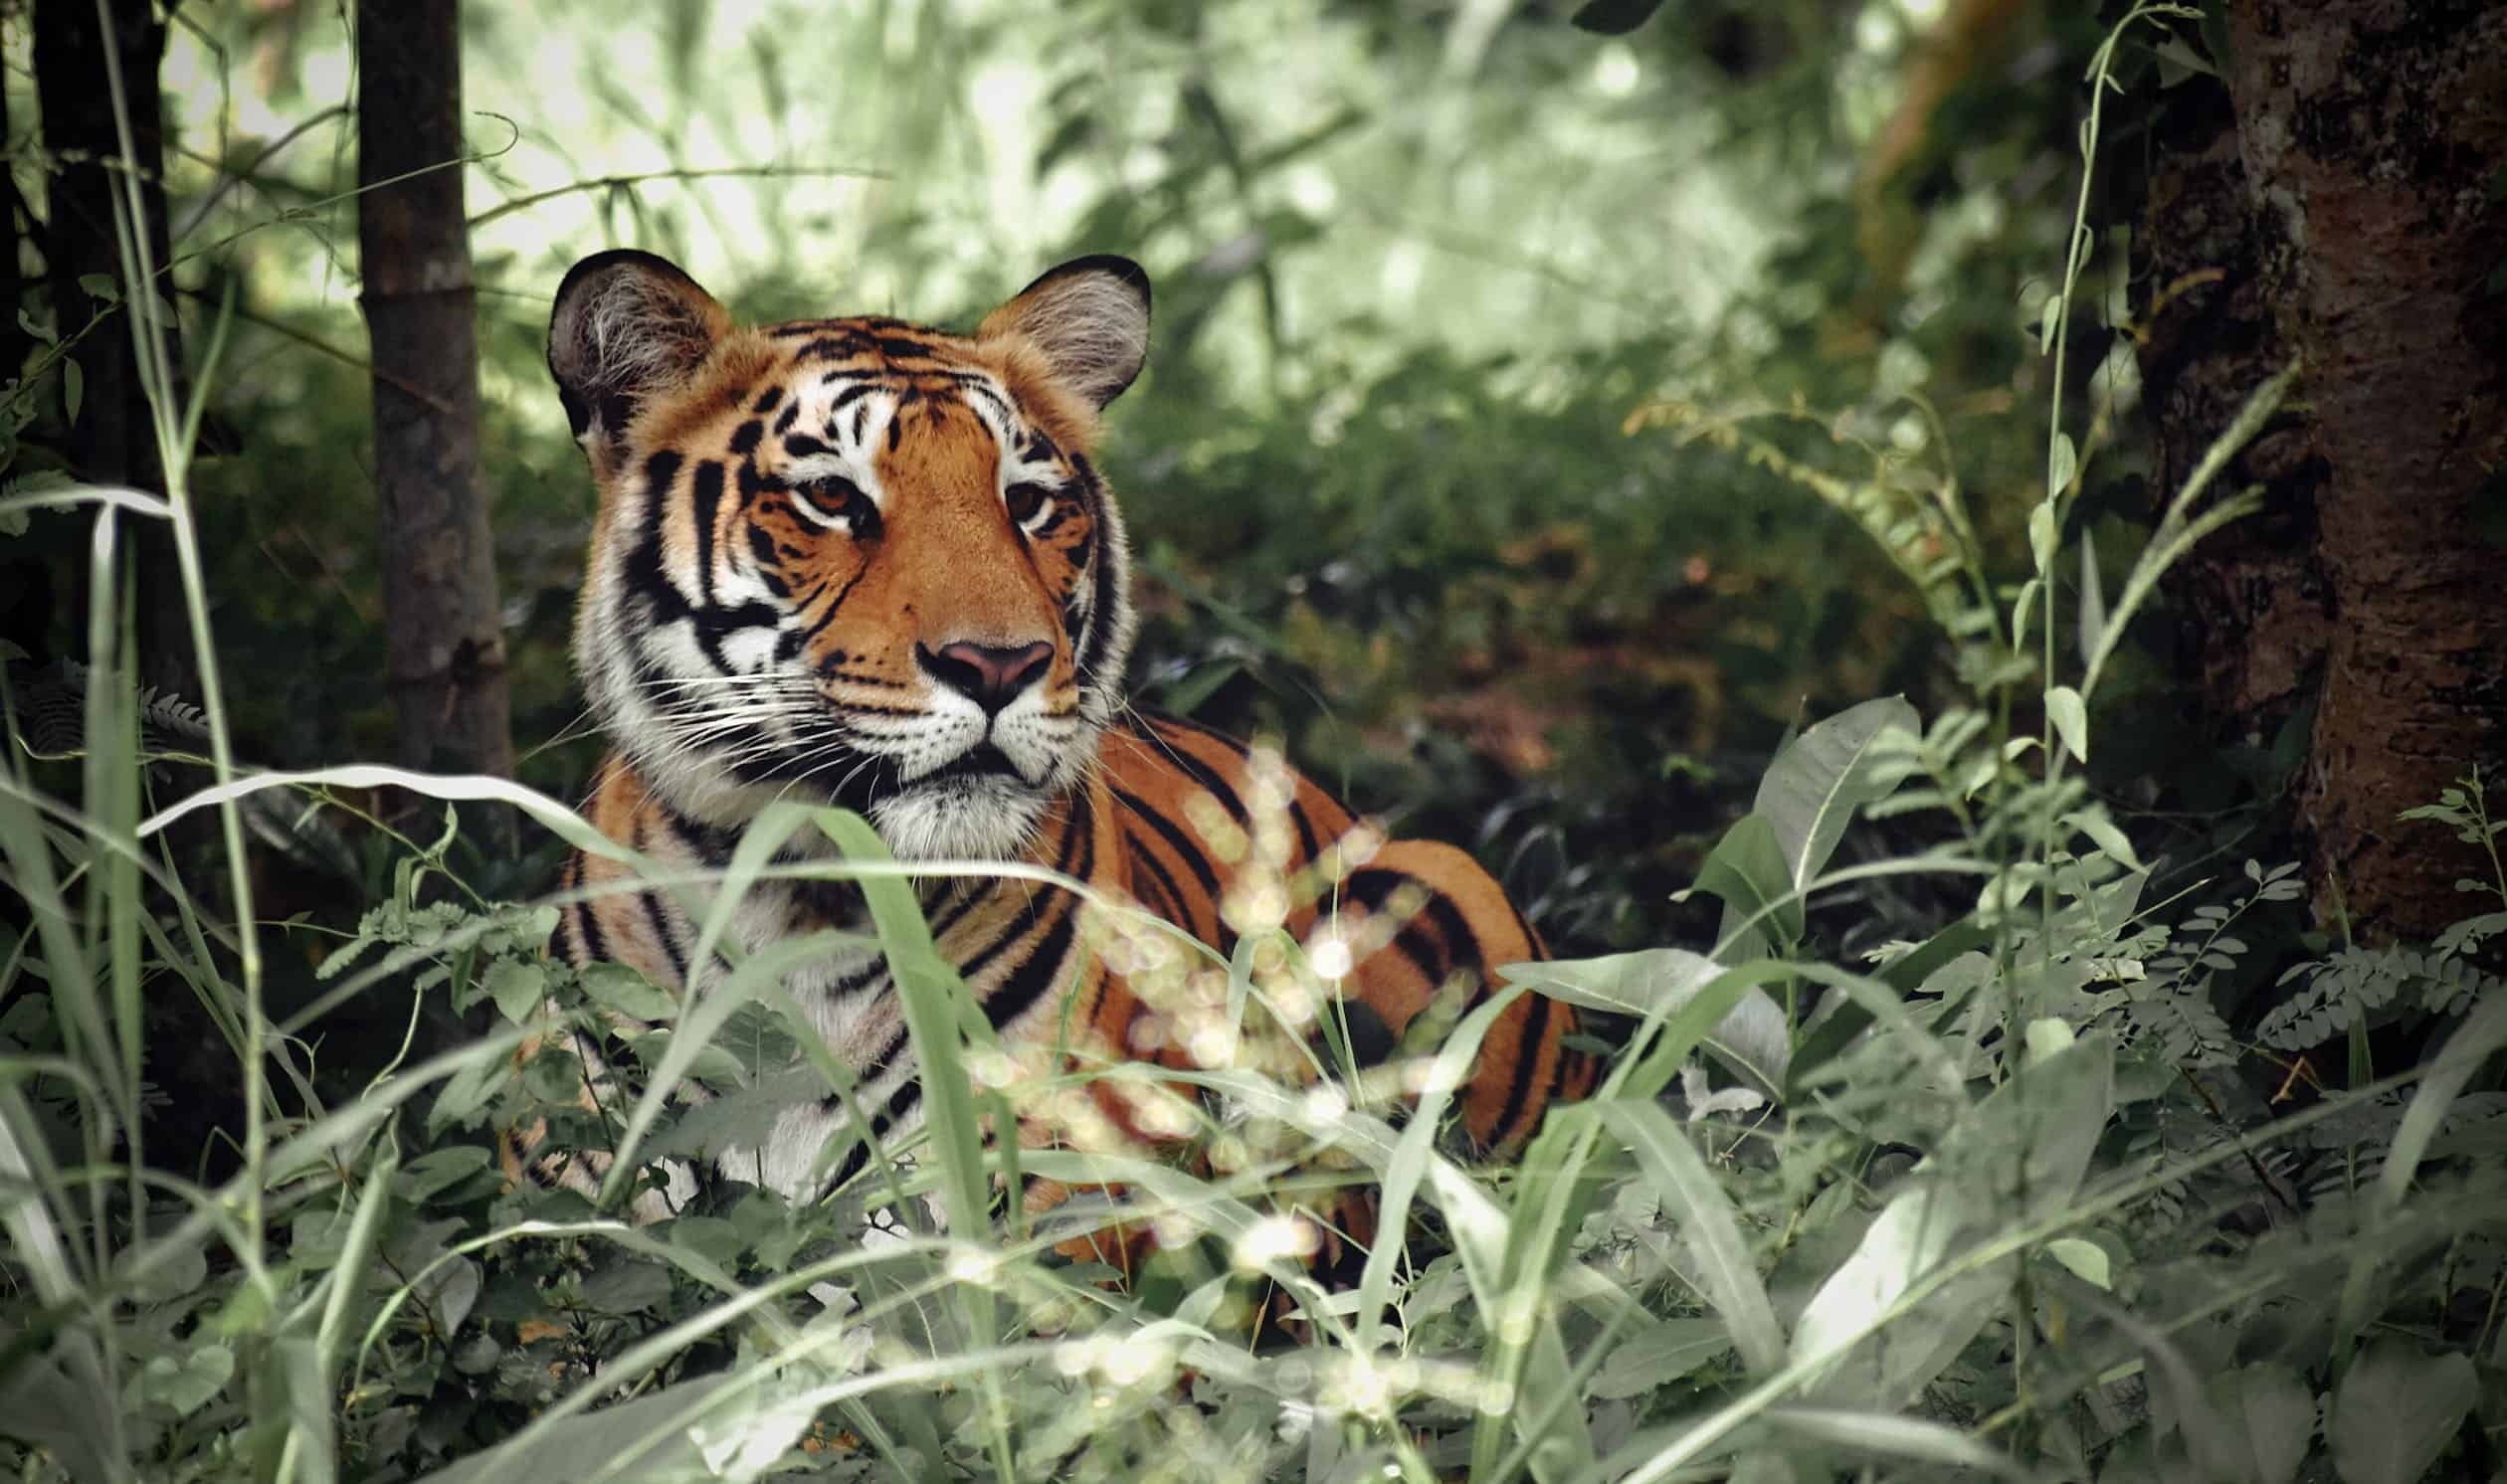 Climate change threatens wild tigers' habitat